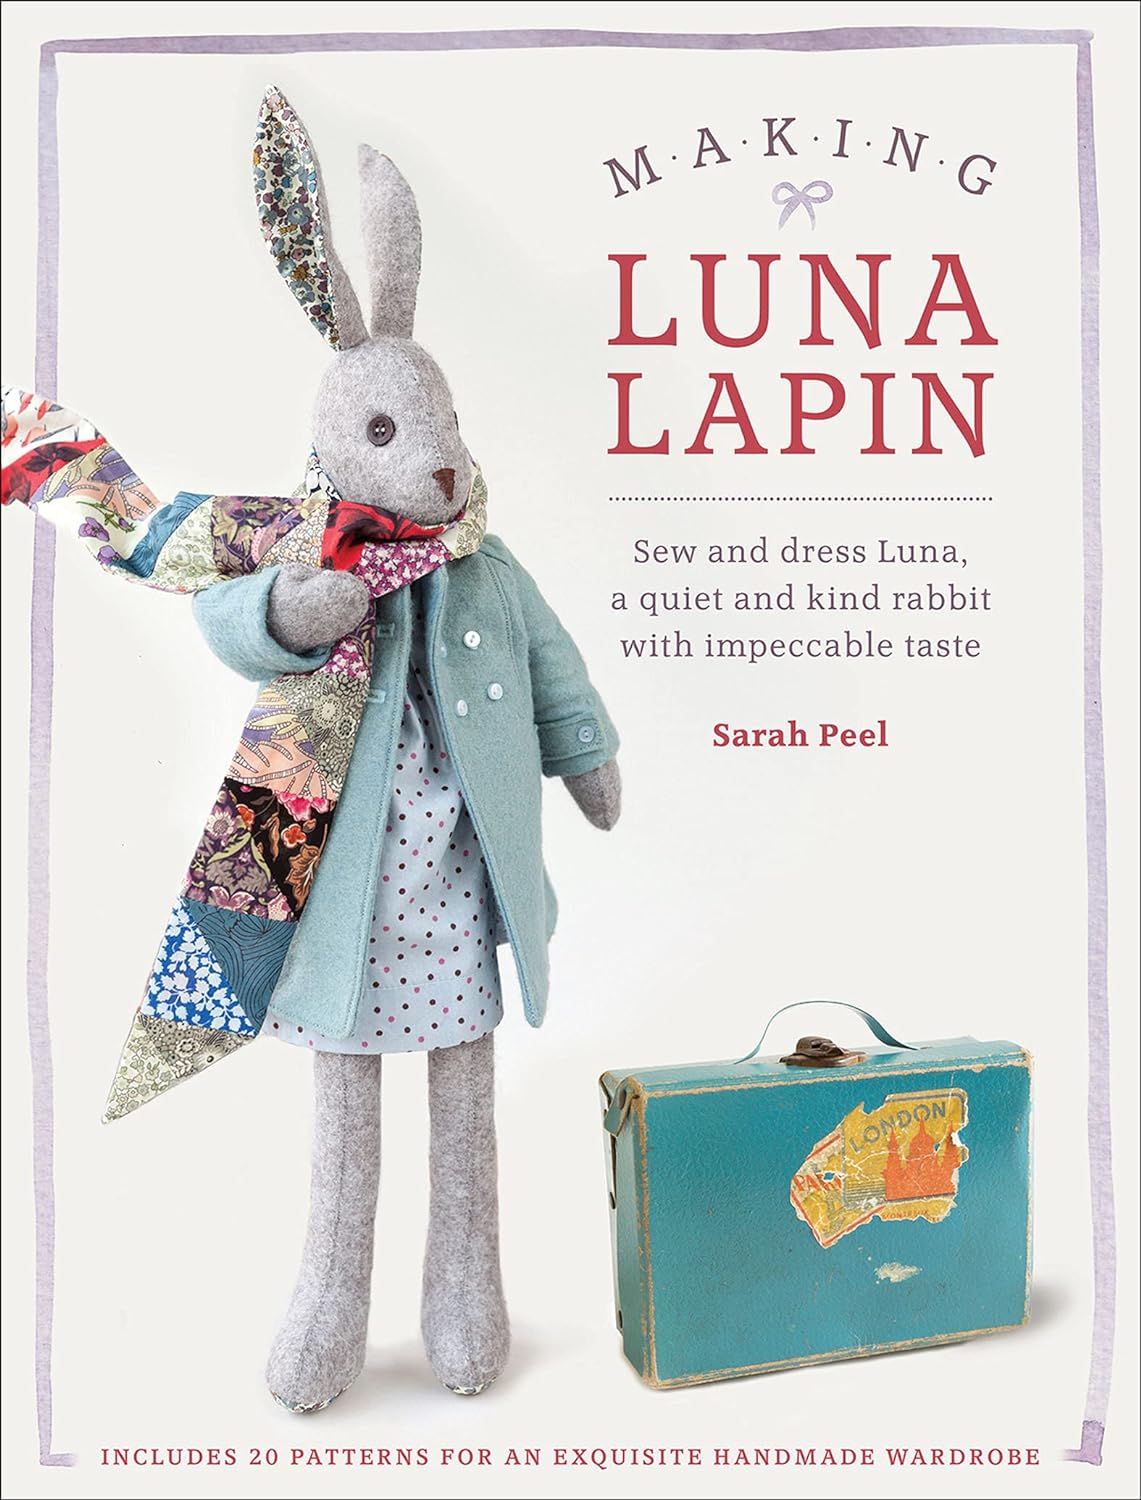 Luna Lapin book